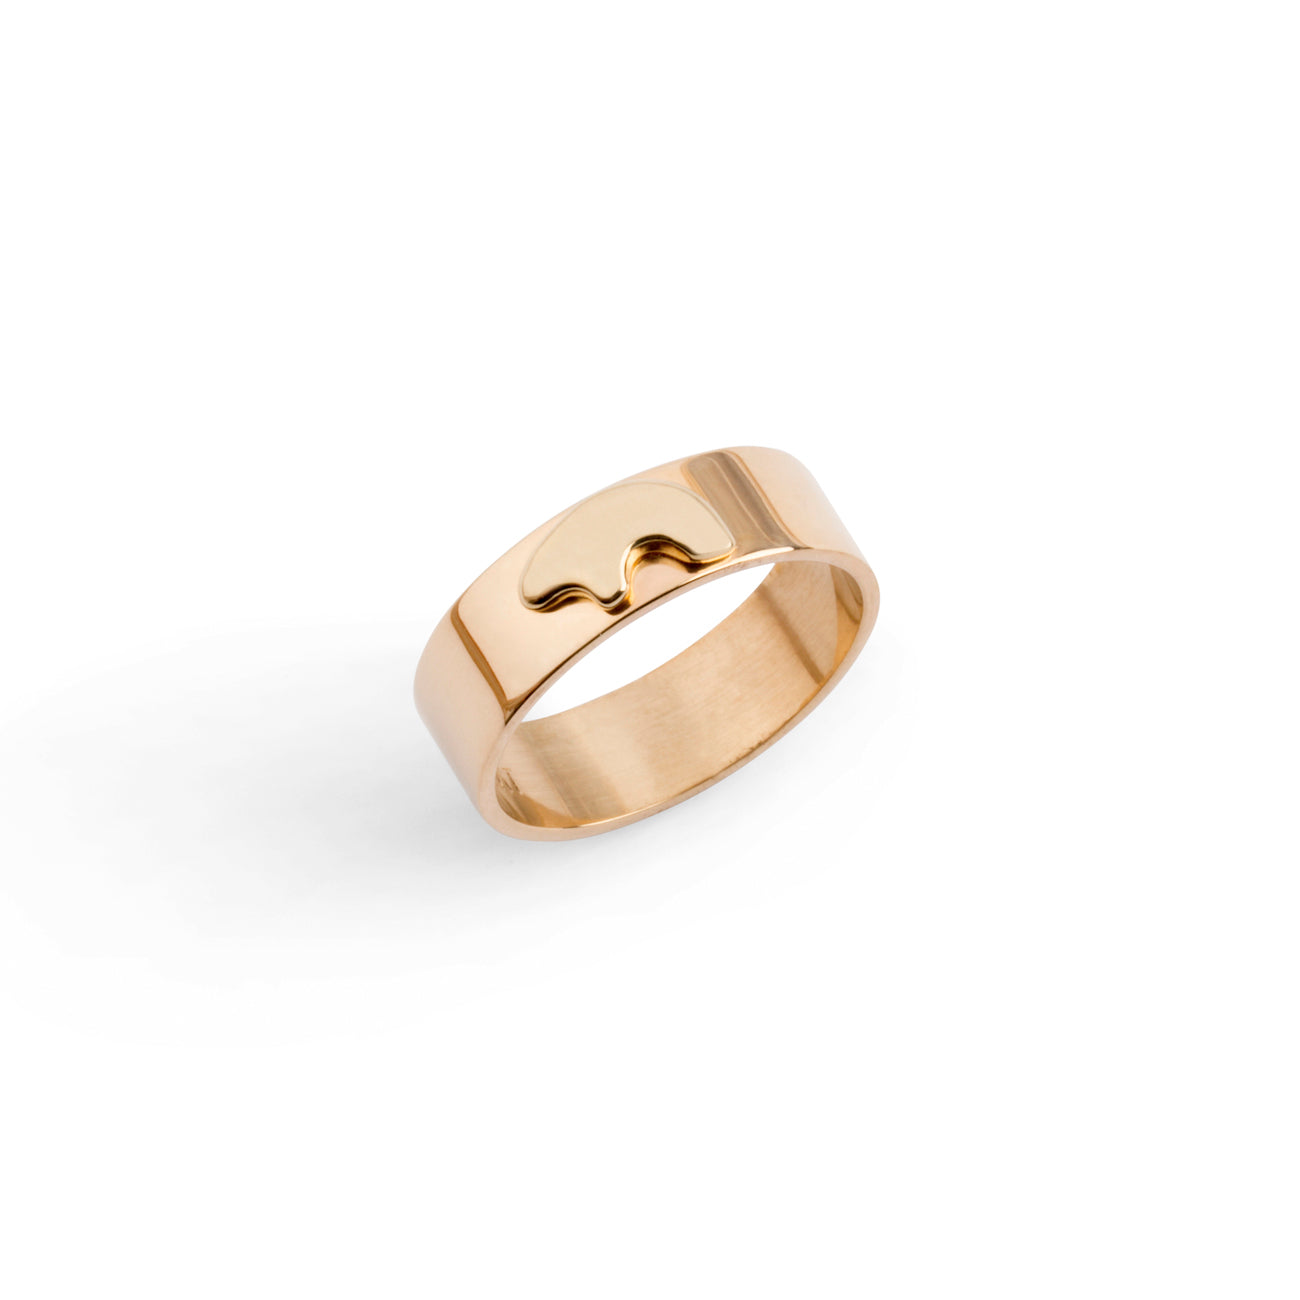 Louis Vuitton Nanogram Ring (Gold/Silver) - Size 6.5